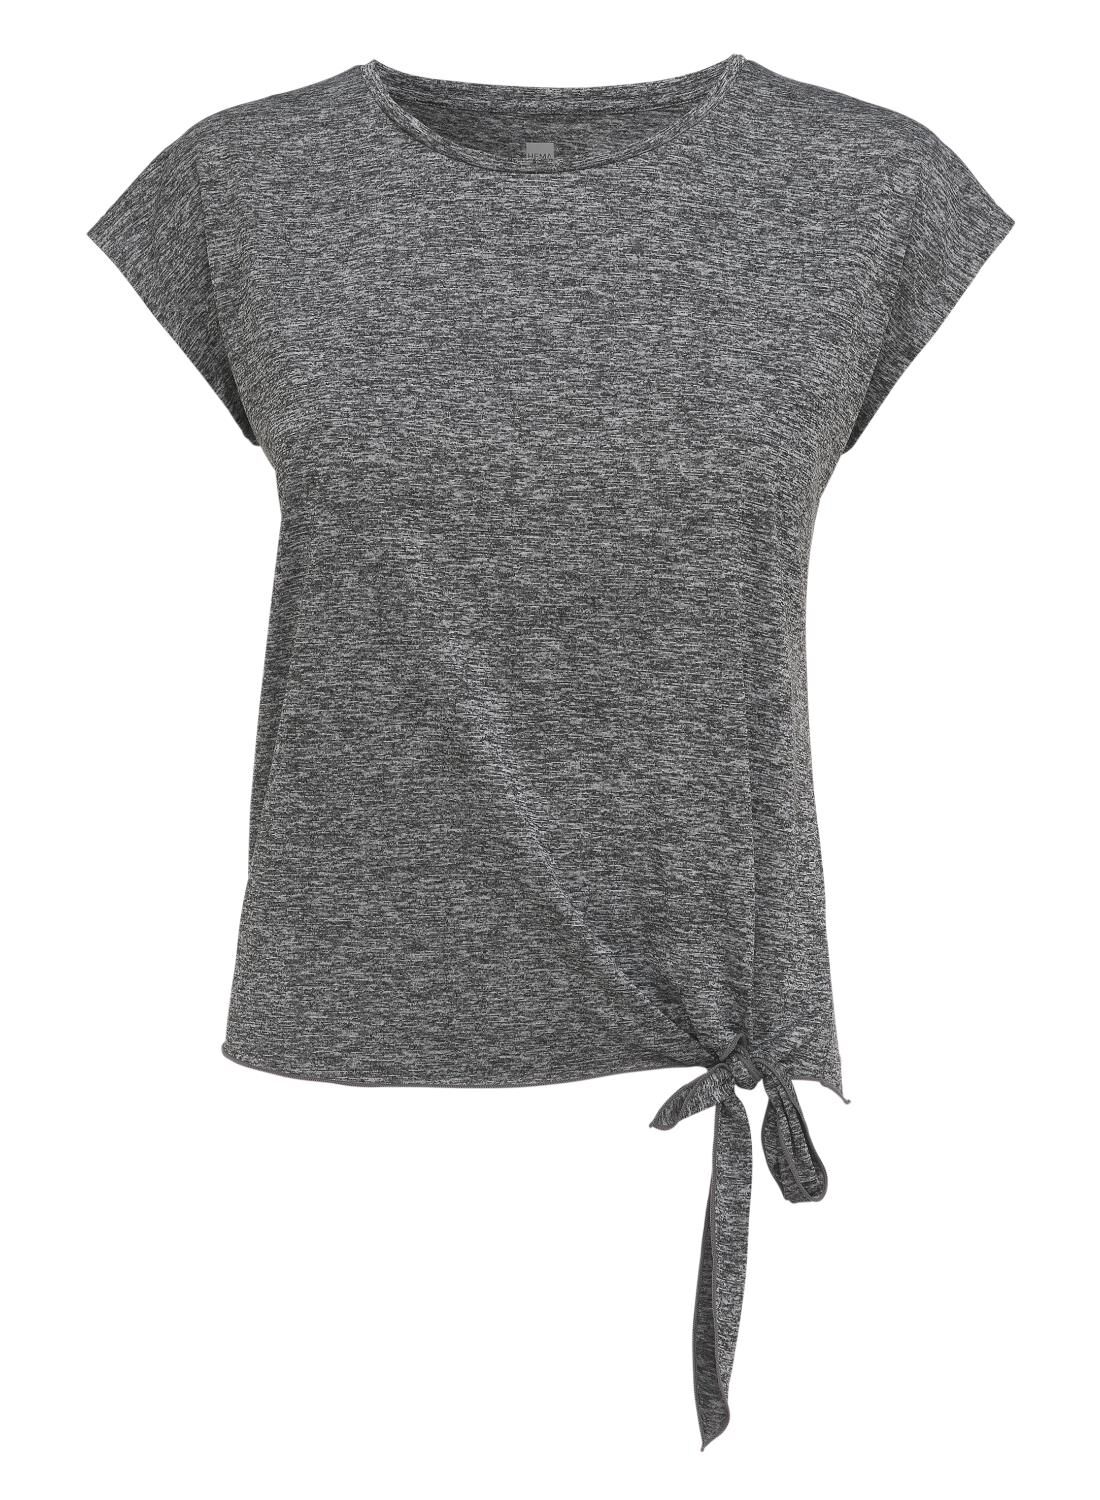 HEMA Dames T-shirt Grijsmelange (grijsmelange)